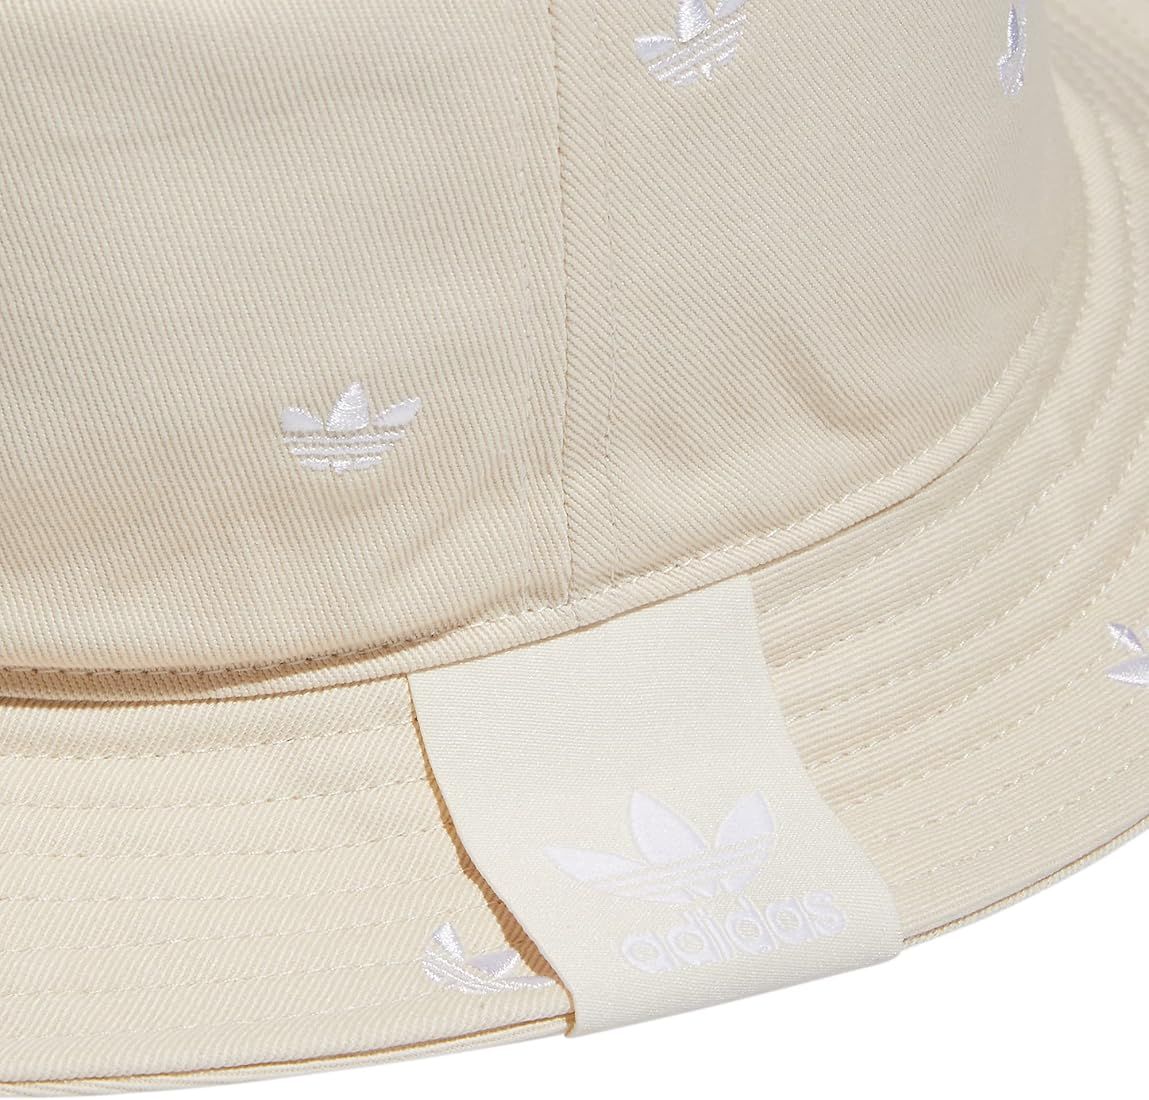 adidas Originals Washed Bucket Hat | Amazon (US)